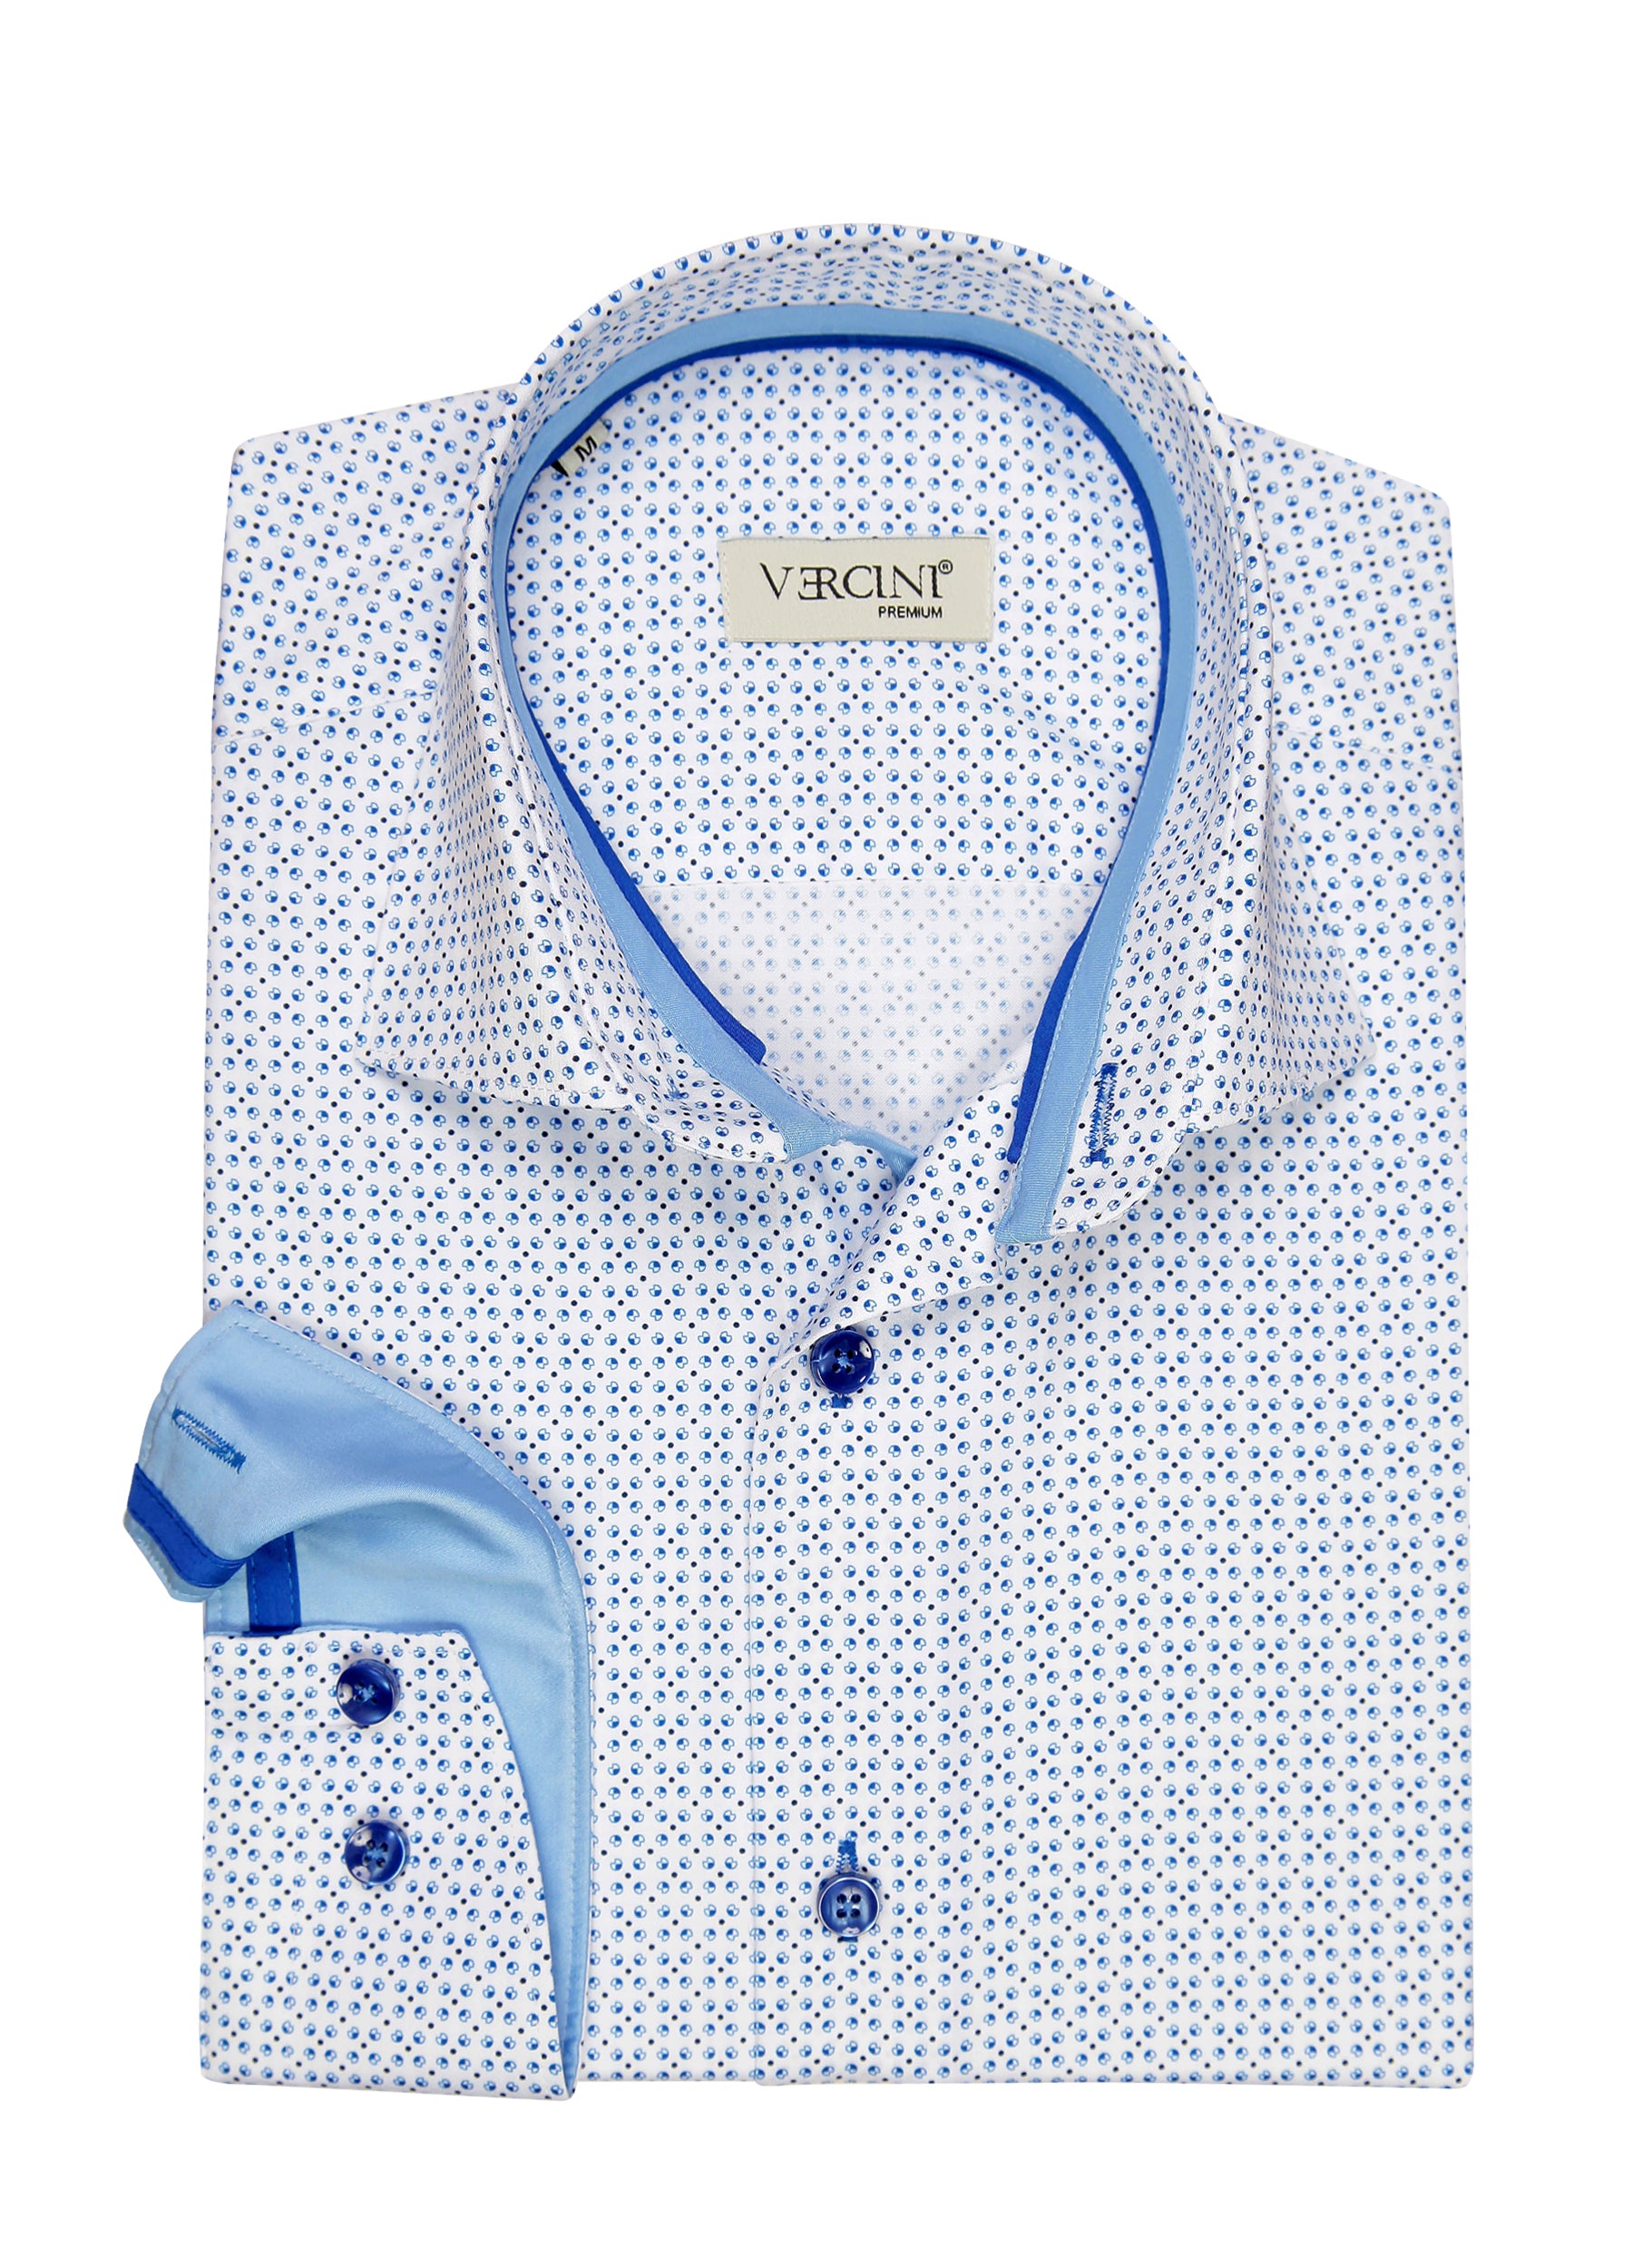 Blue and white shirt DRESS SHIRTS Do Vercini